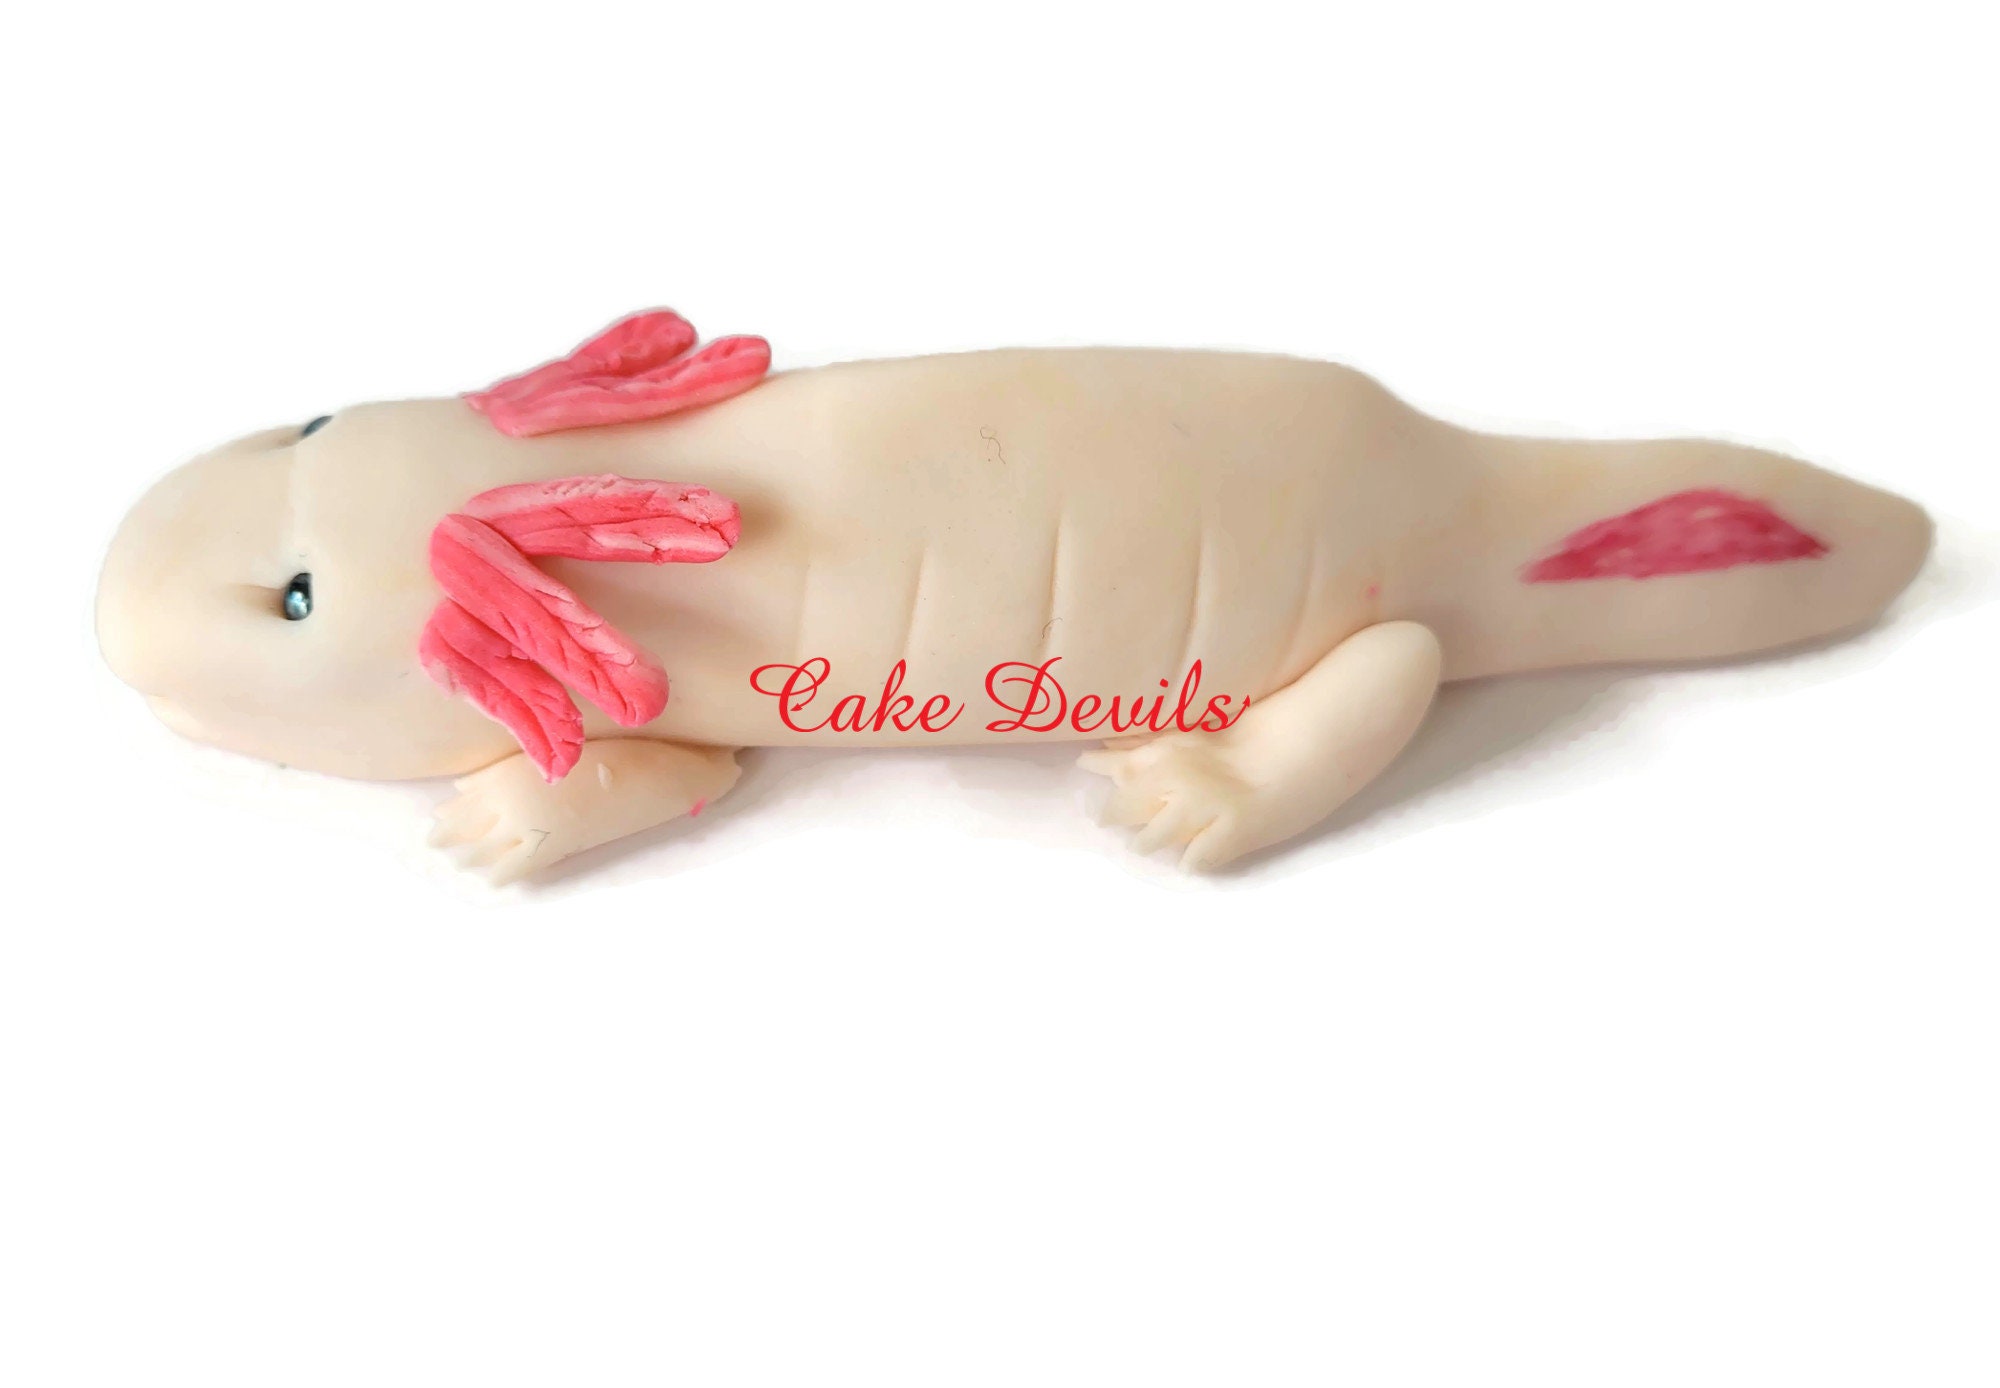 Fondant Axolotl Cupcake Topper Fondant Axolotl Fondant Salamander Fondant  Reptile Axolotl Cake Axolotl Birthday Axolotl Theme 